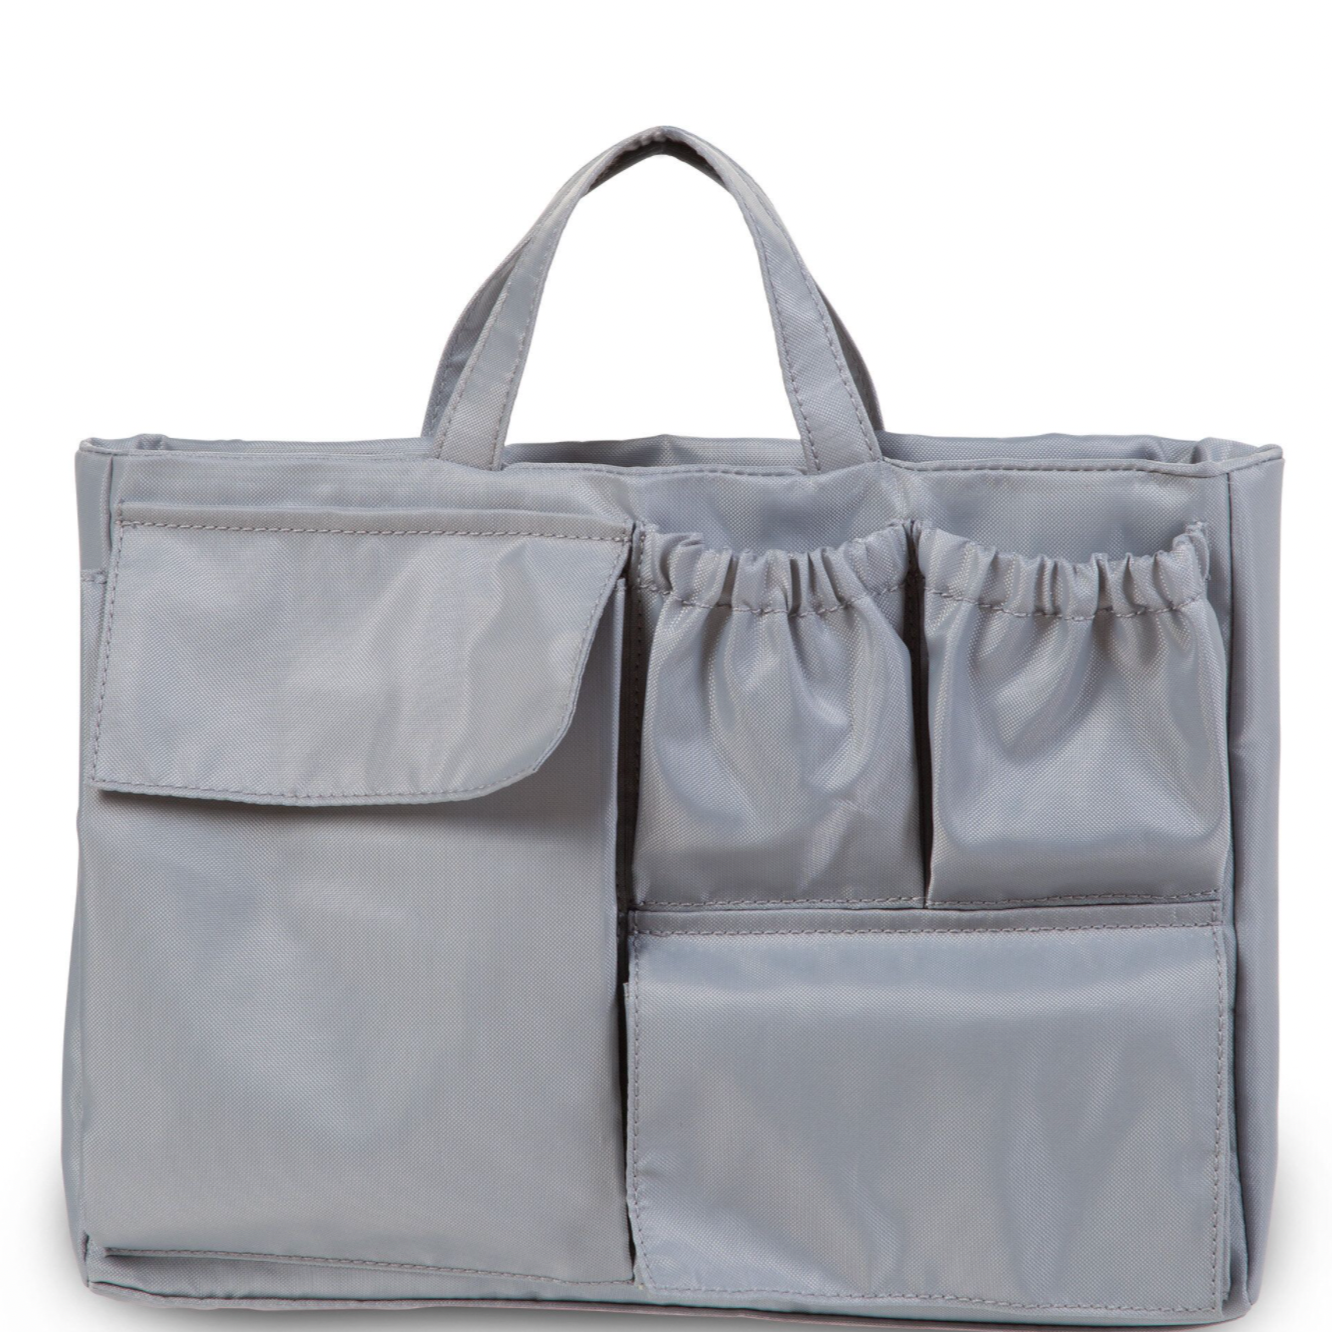 Bag in Bag organiser - Childhome